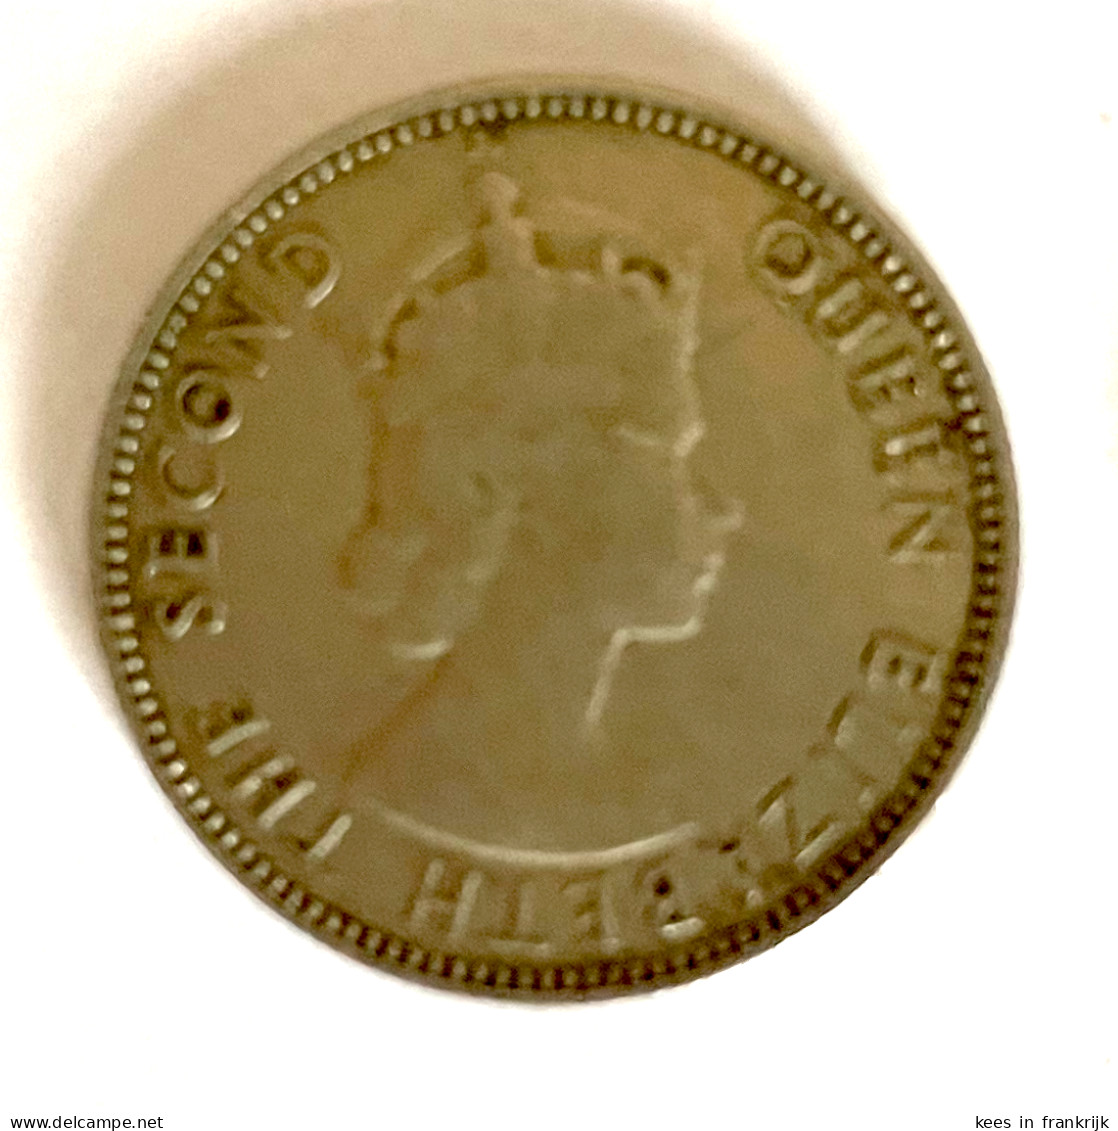 East Africa / Afrique Orientale - 50 Cents 1954 - Queen Elizabeth II - Britse Kolonie